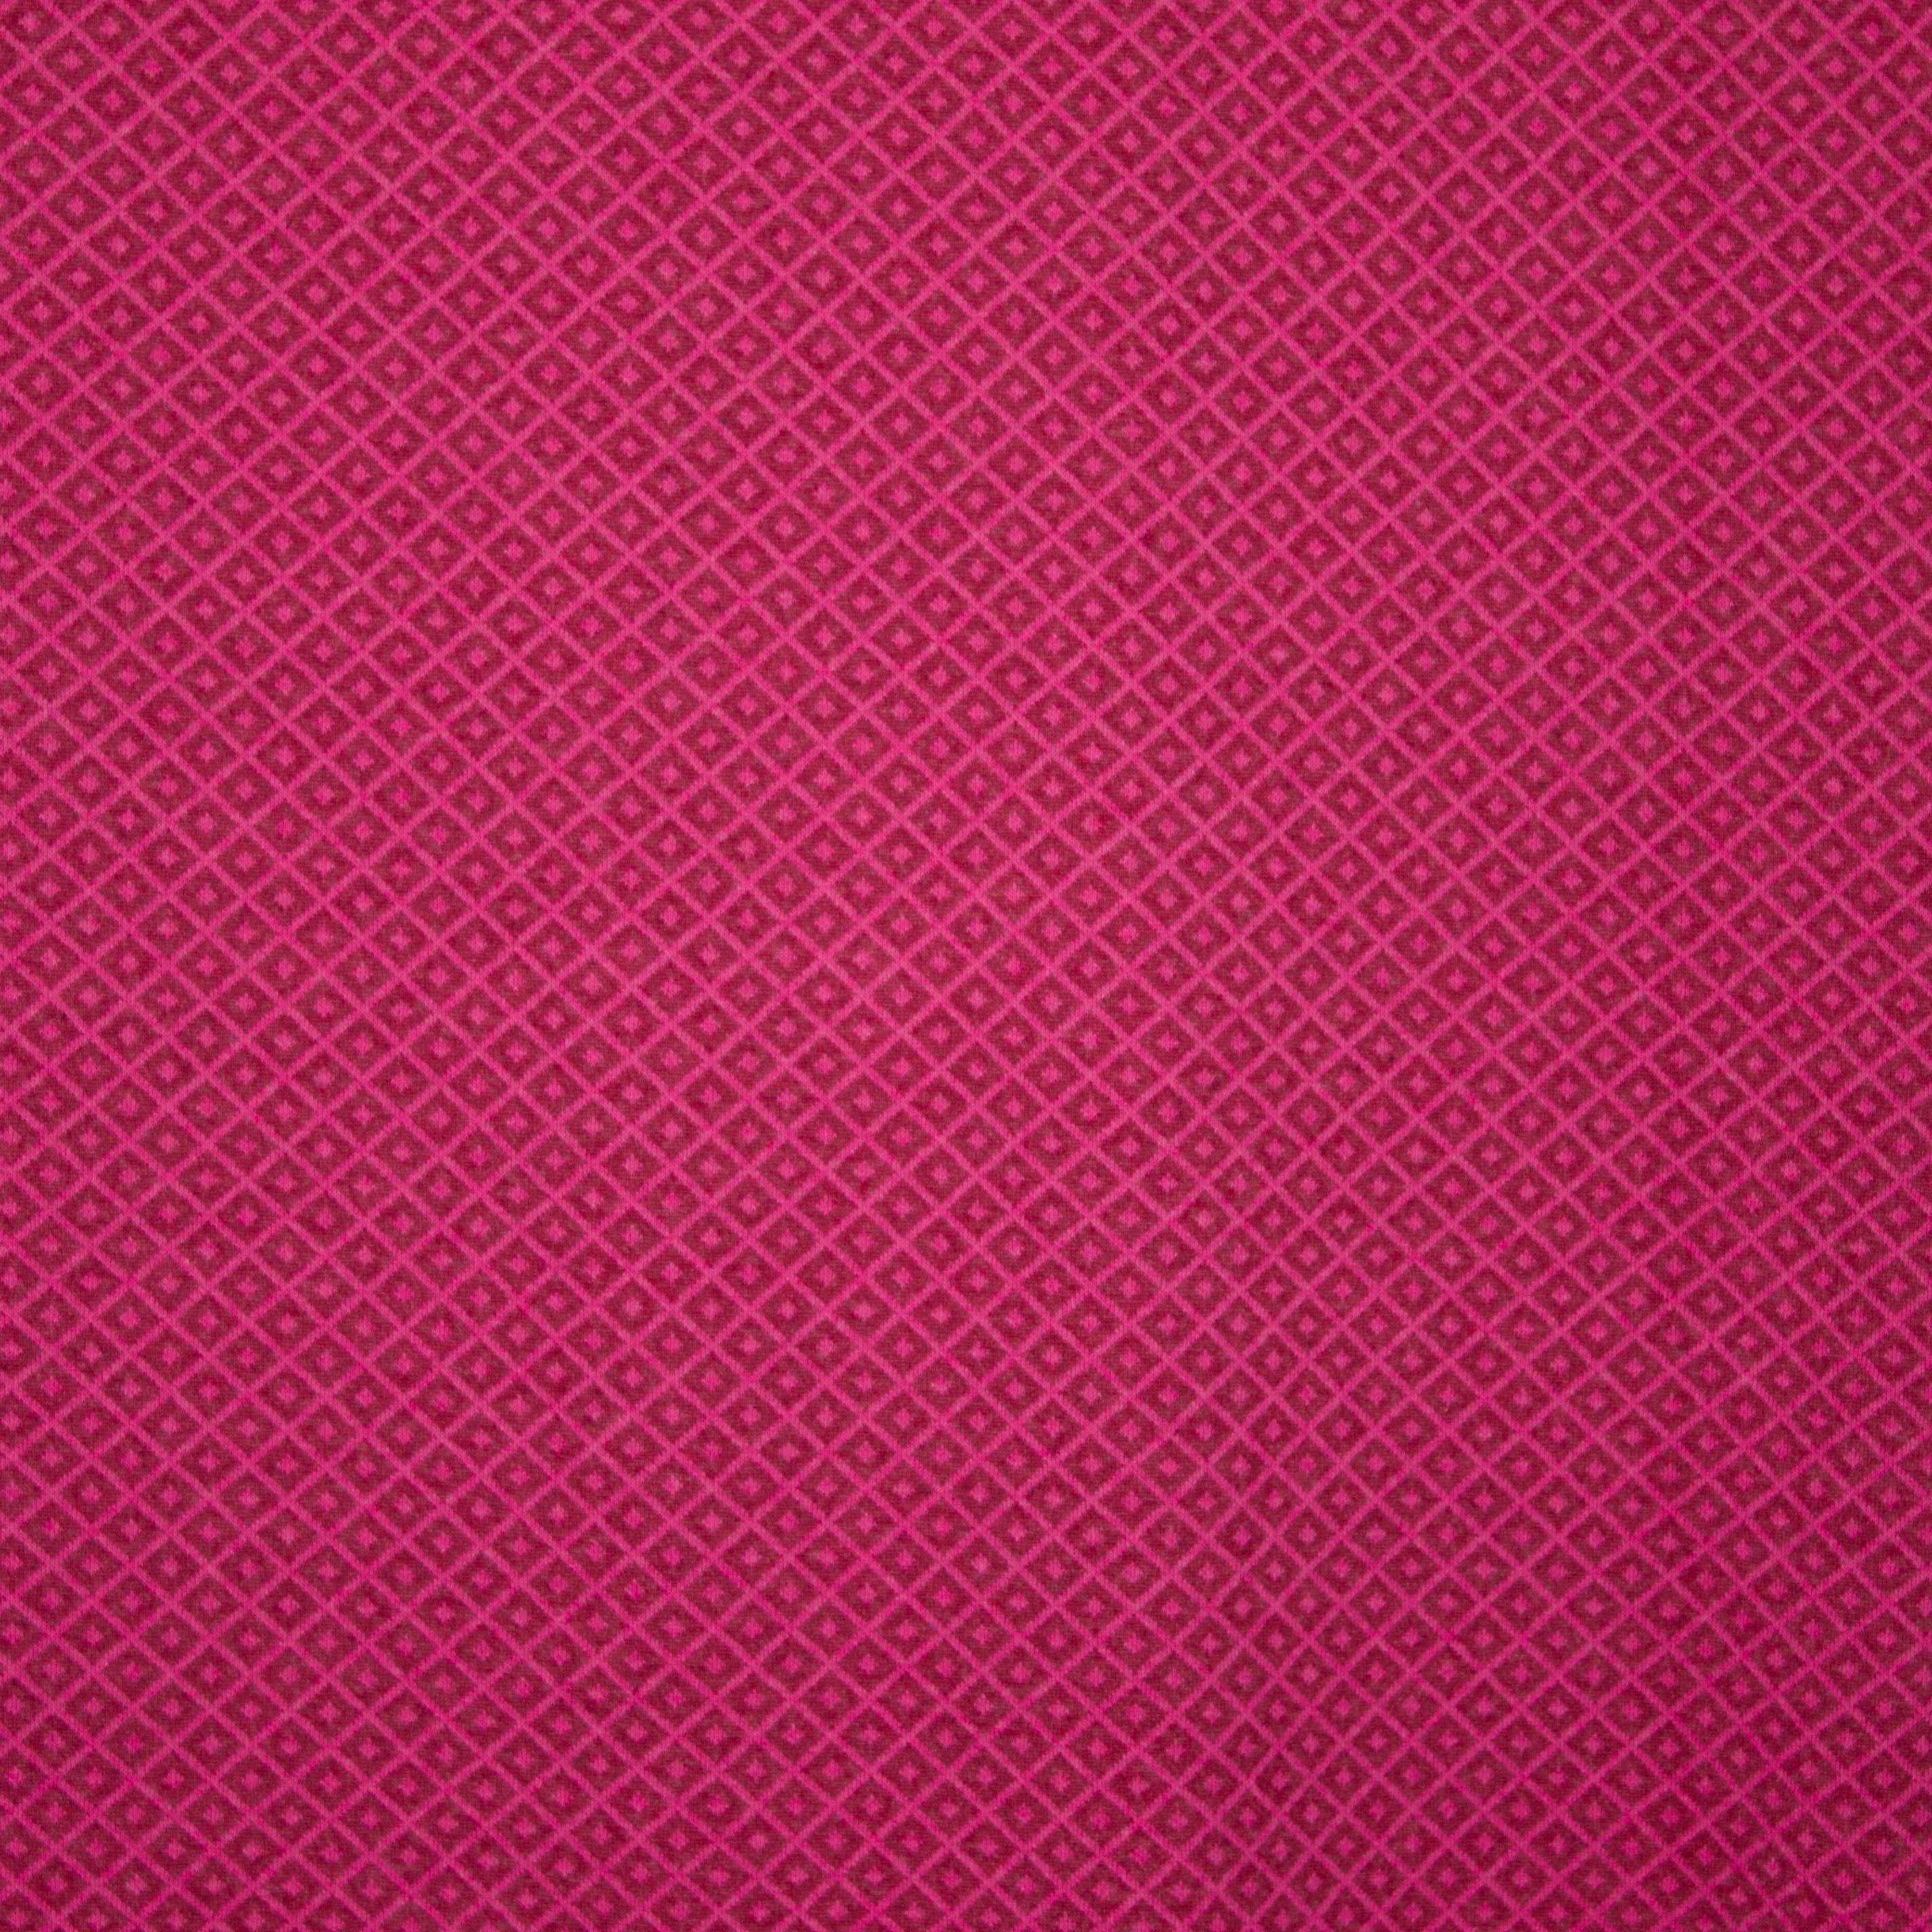 Roze / bordeaux breitje met diagonale ruitjes